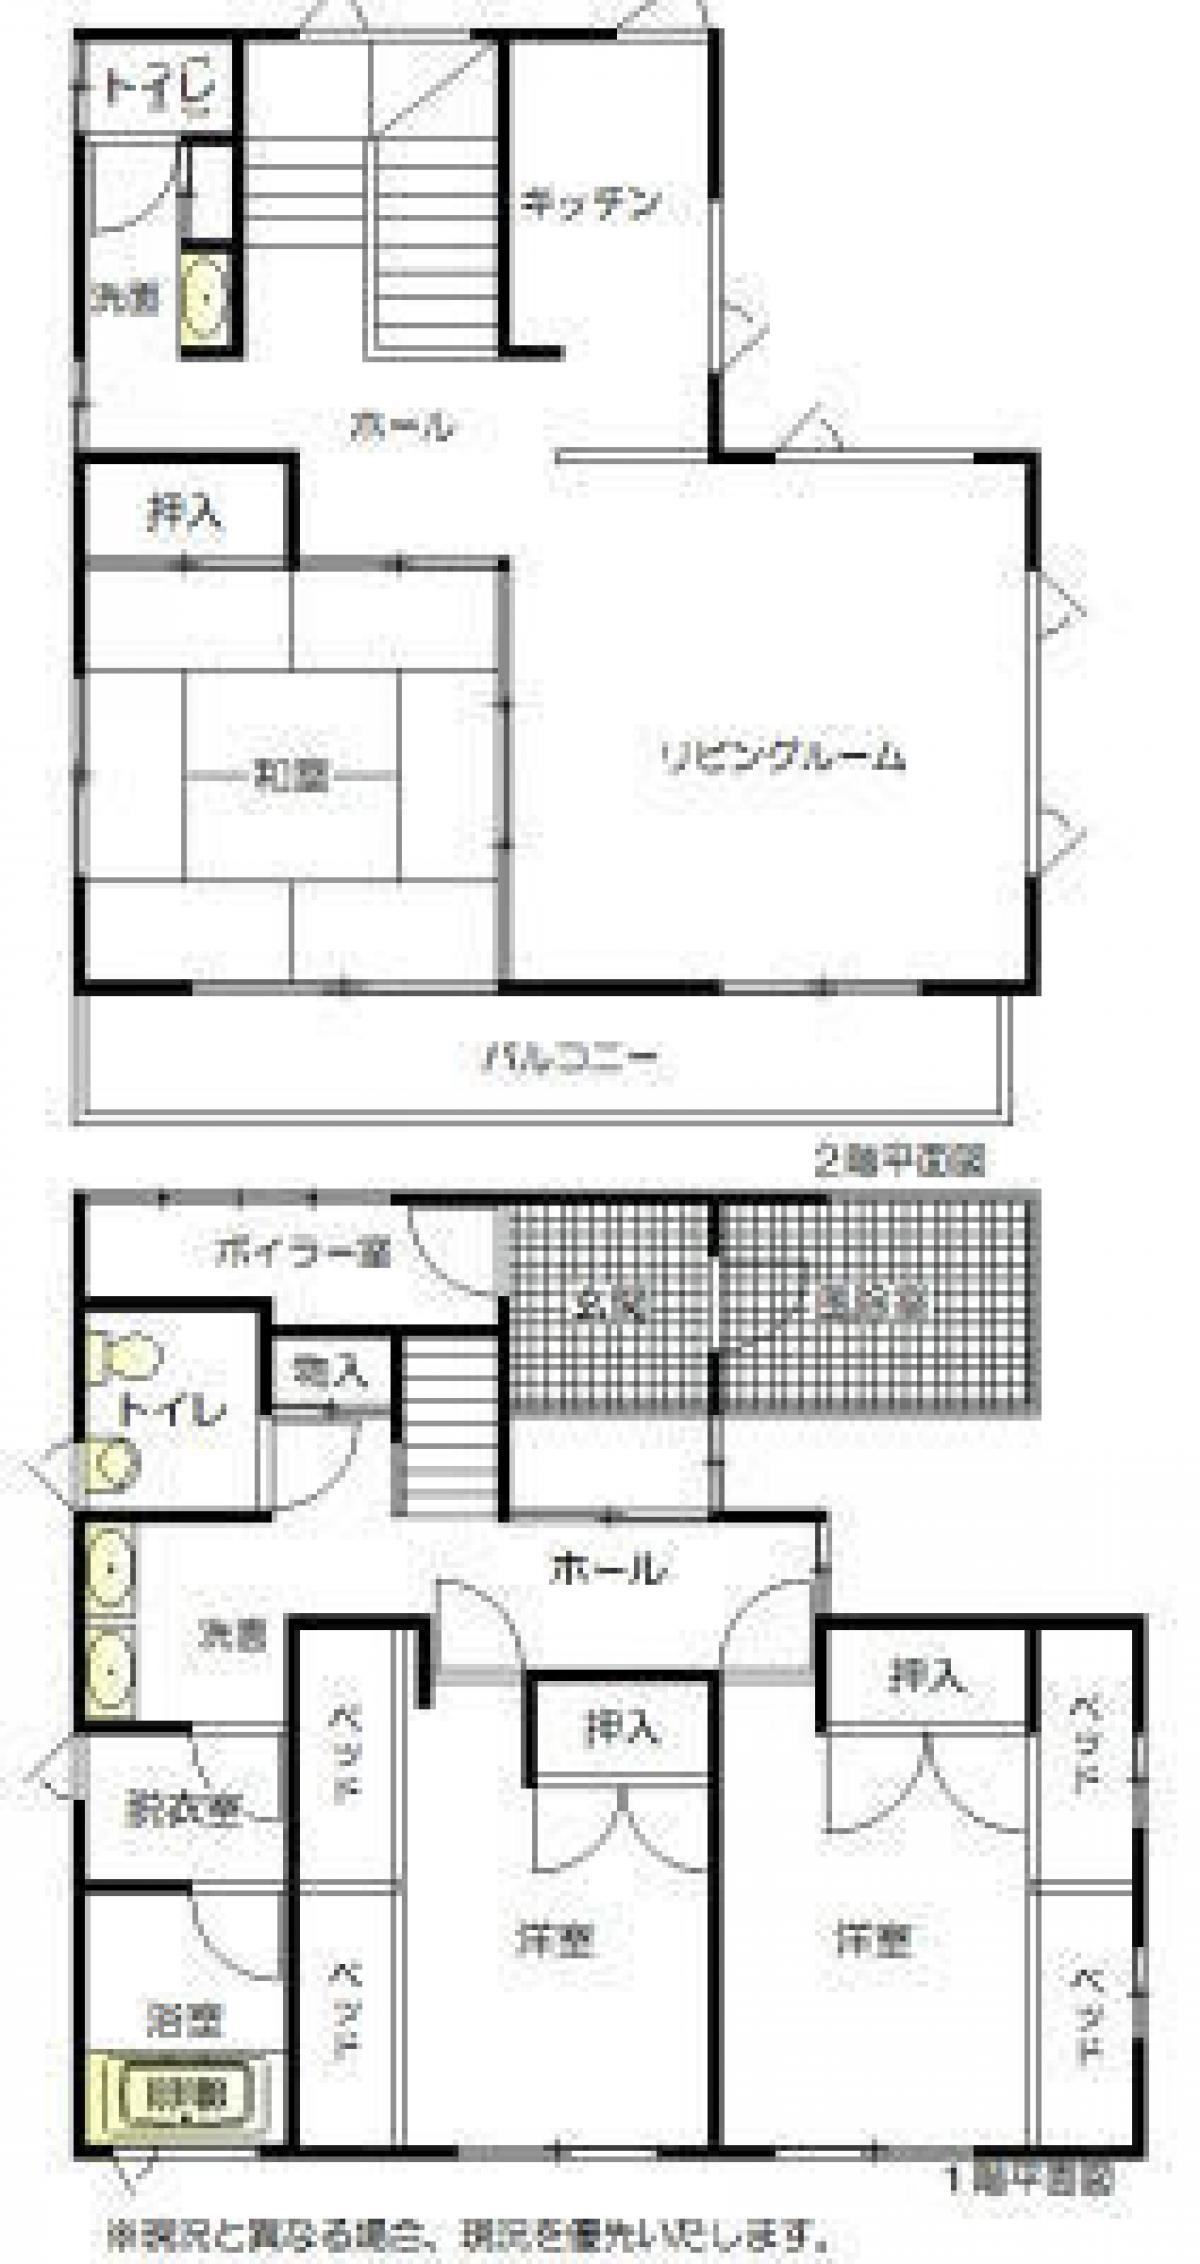 Picture of Home For Sale in Iwate Gun Shizukuishi Cho, Iwate, Japan